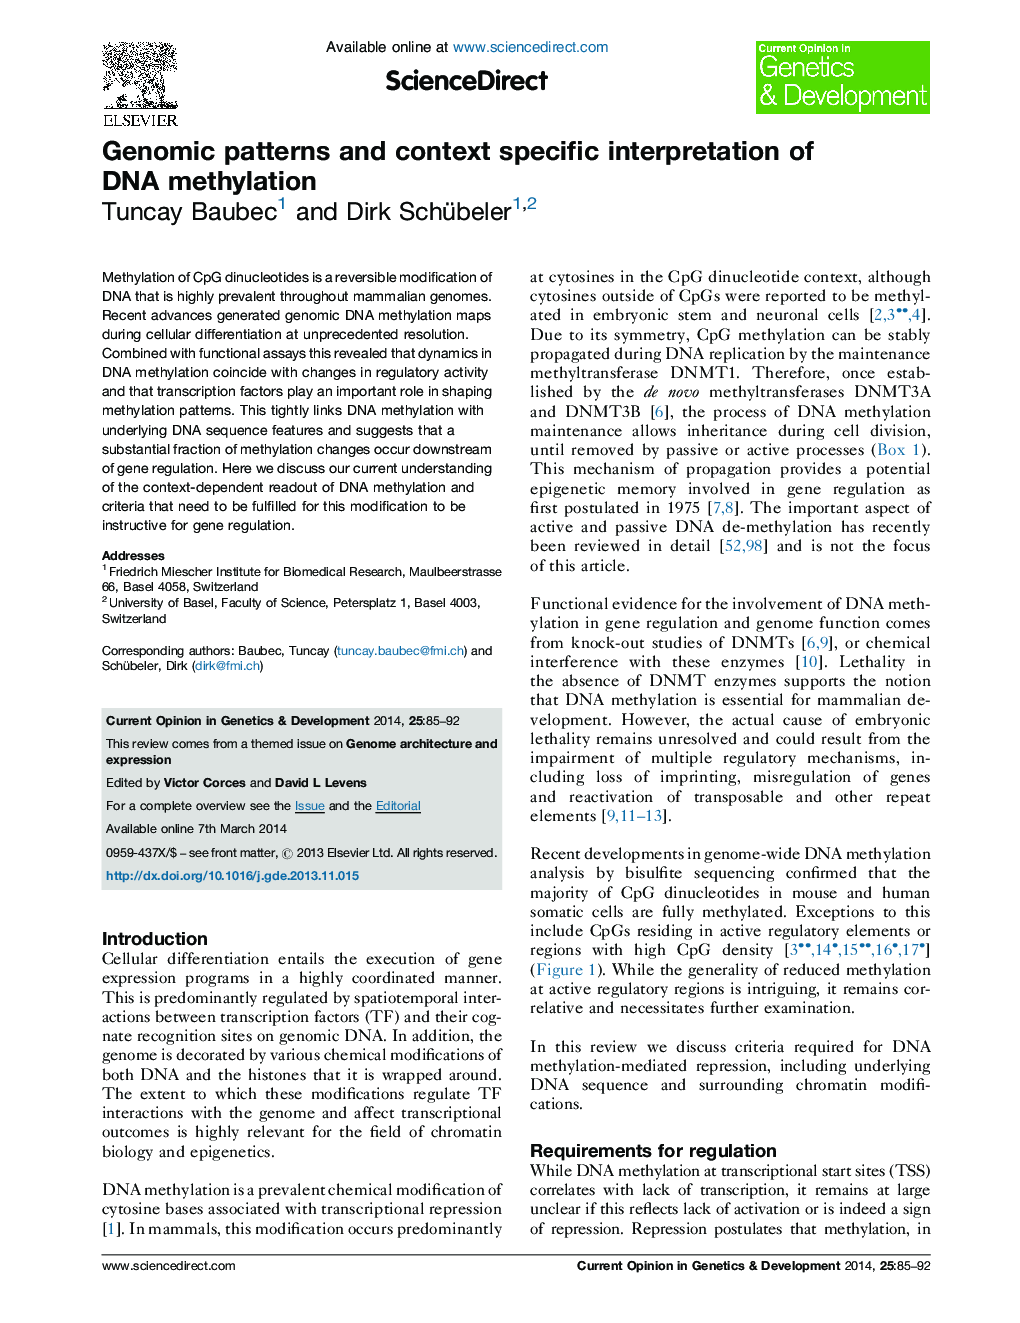 Genomic patterns and context specific interpretation of DNA methylation